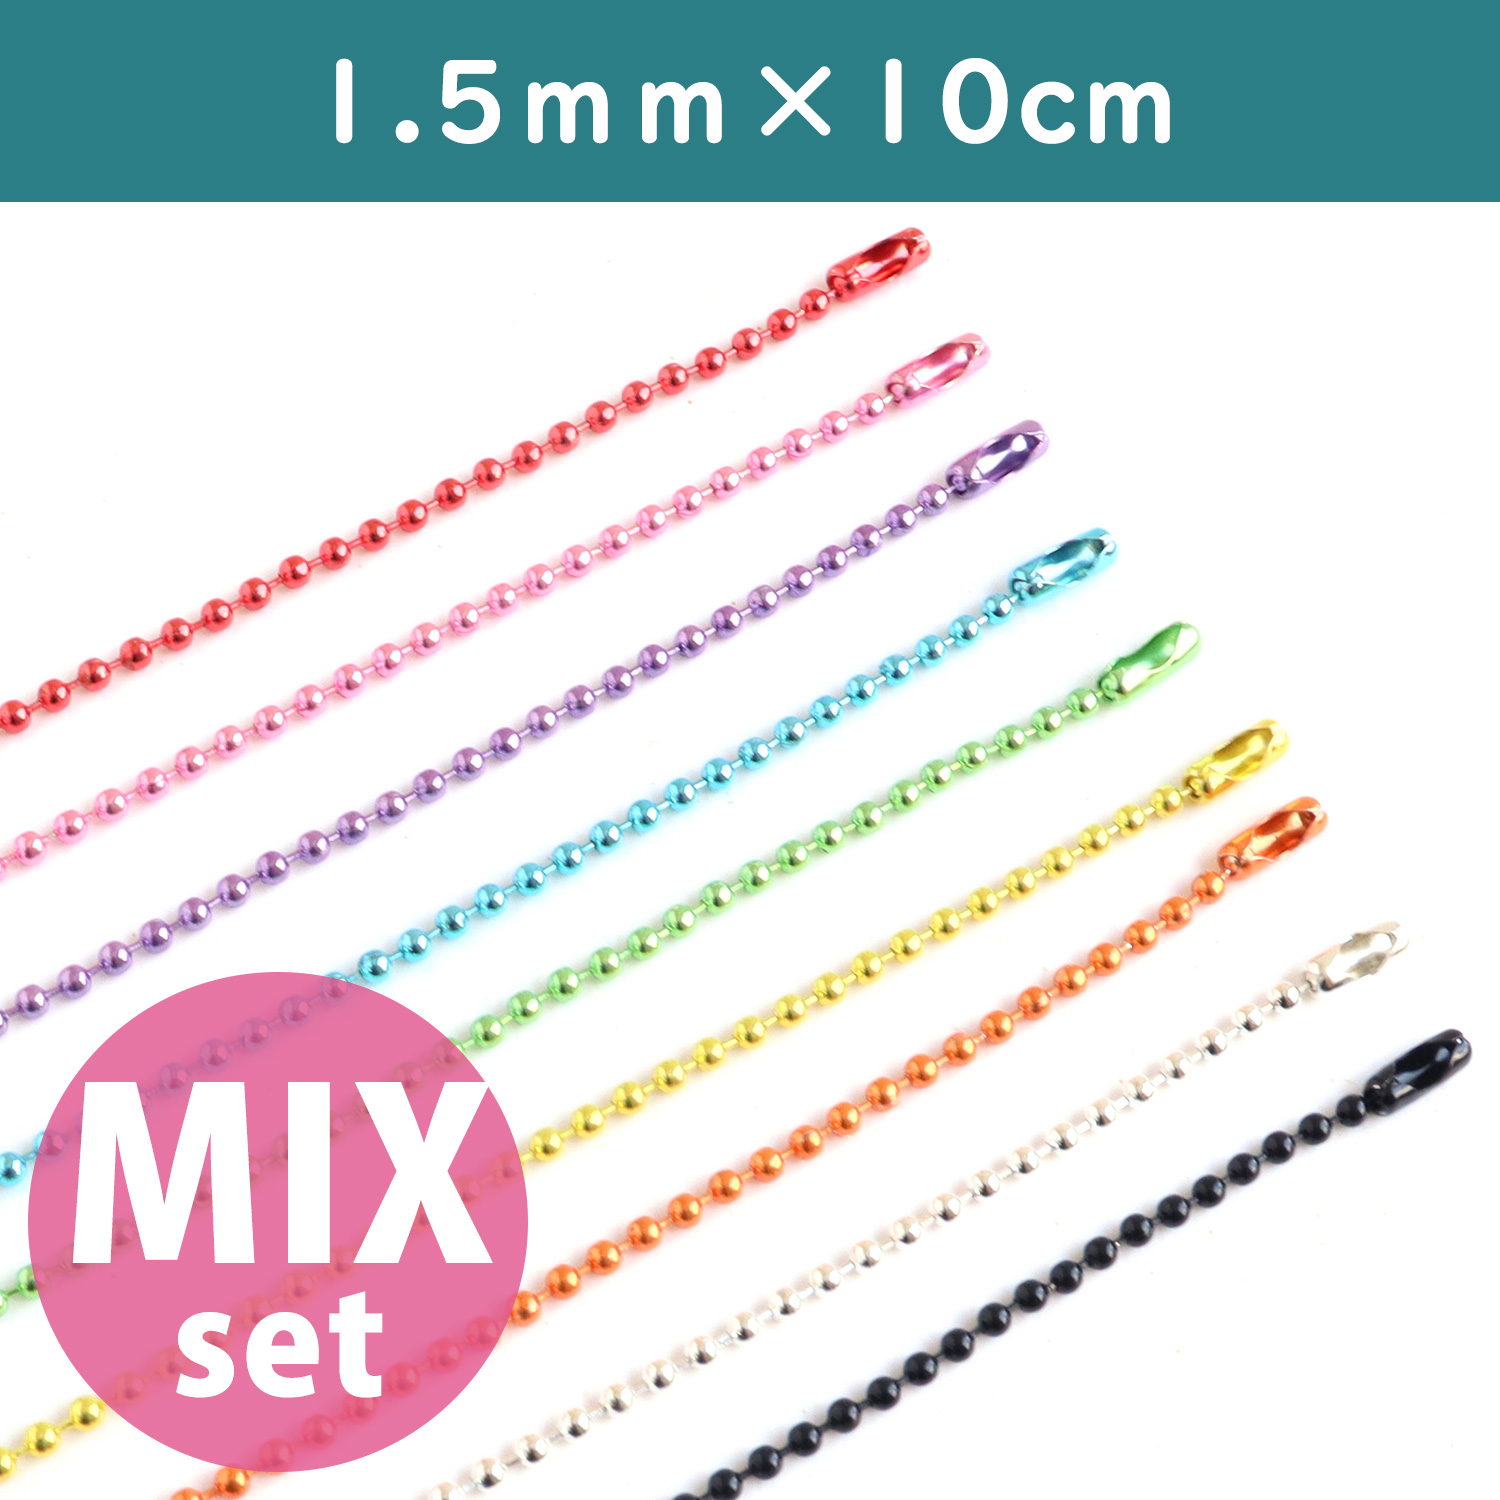 NS306 Colored Ball Chain MIX 9pcs 1.5mm x 10cm (bag)